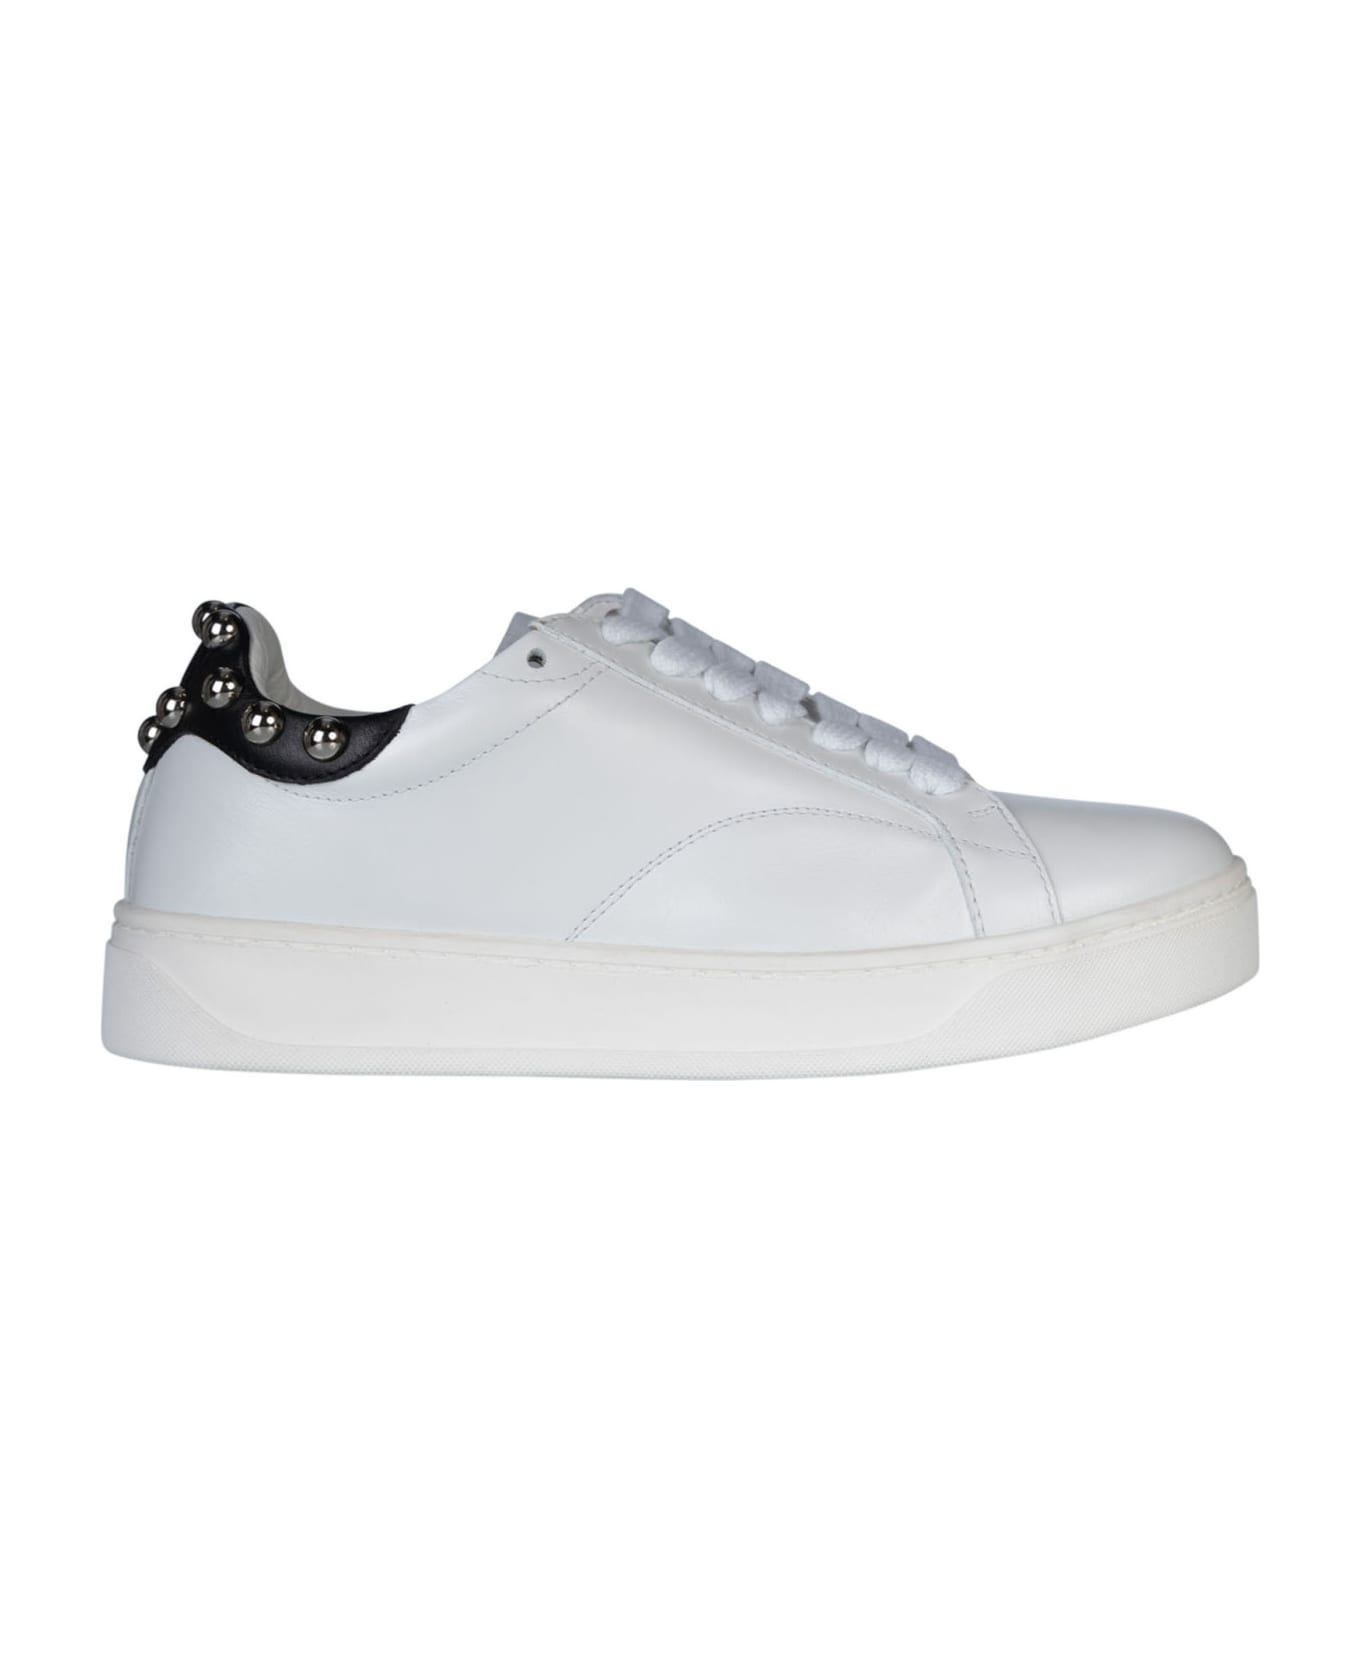 Lanvin Back Studded Sneakers - White/Silver スニーカー